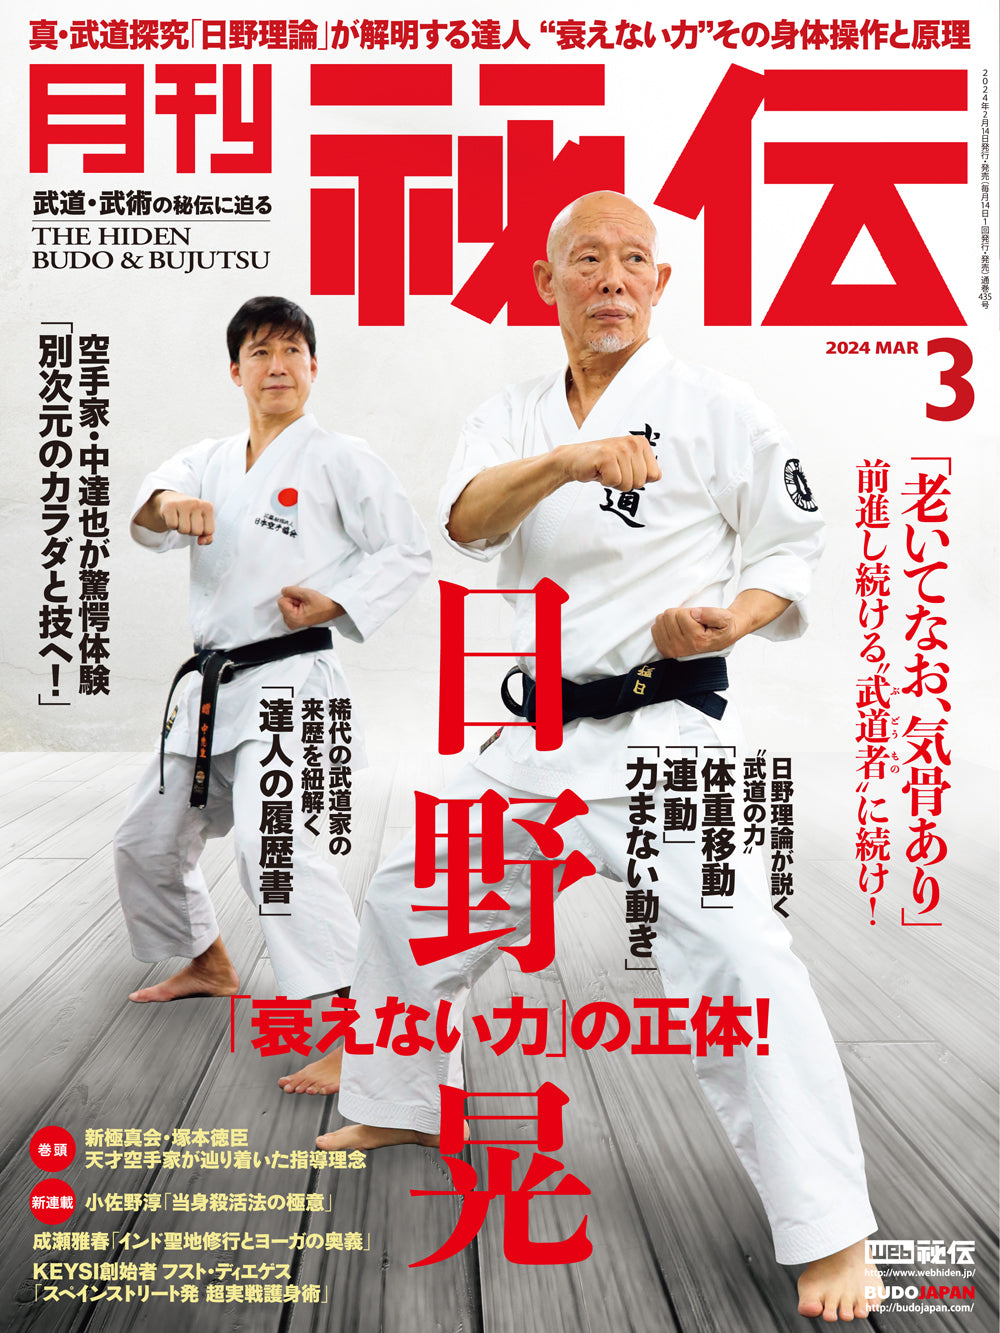 Hiden Budo & Bujutsu Magazine March 2024